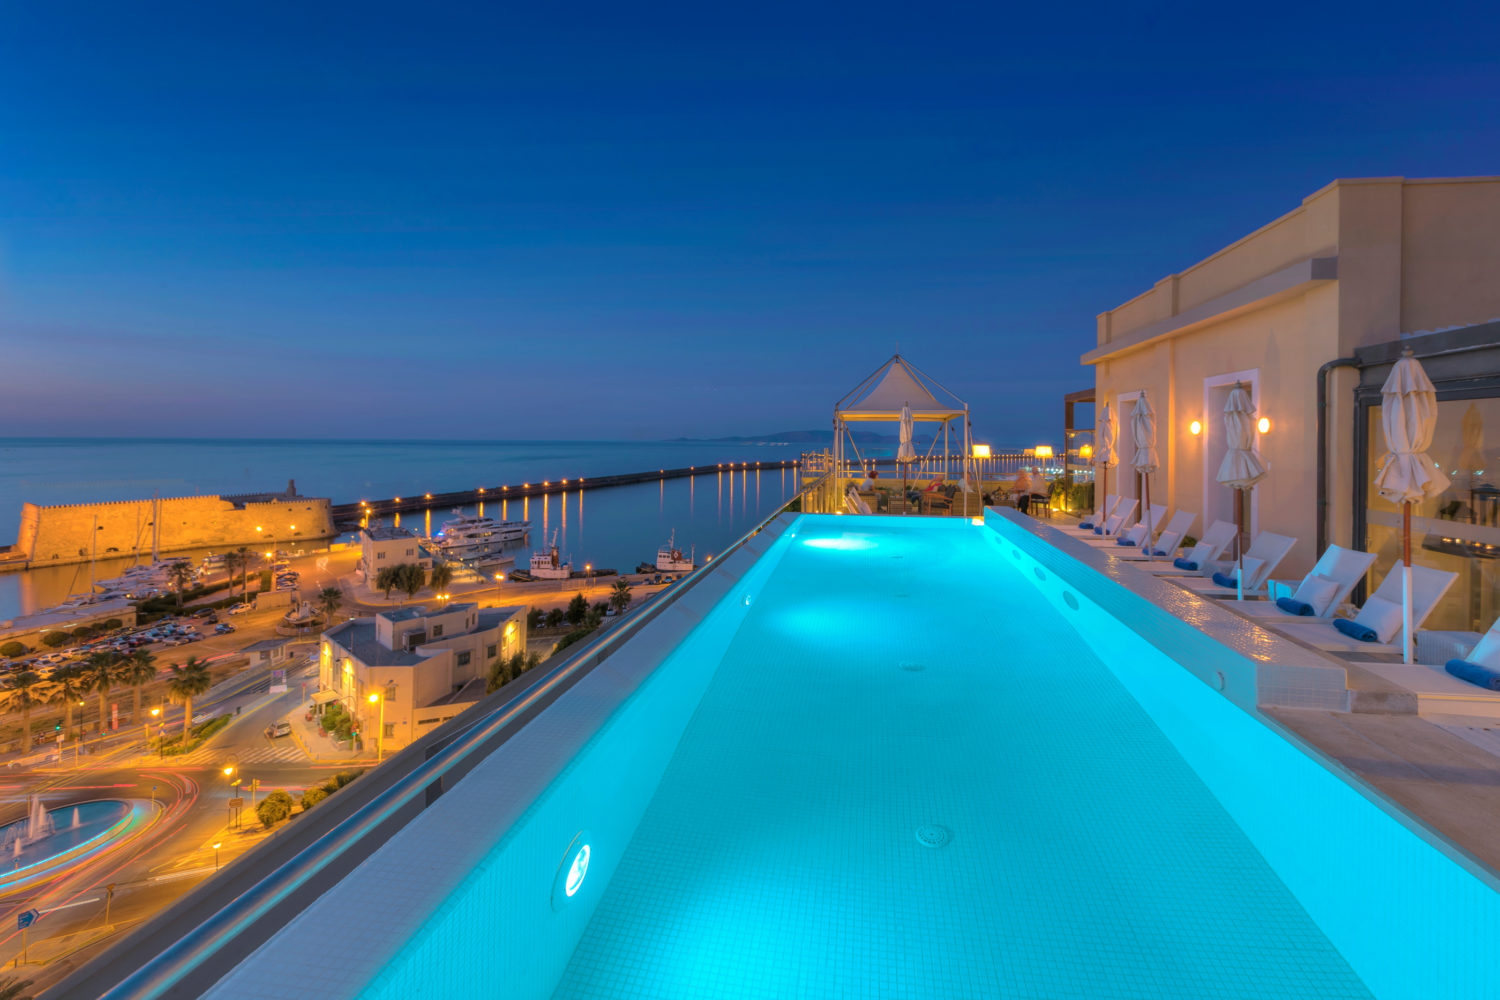 Megaron Hotel Heraklion Crete